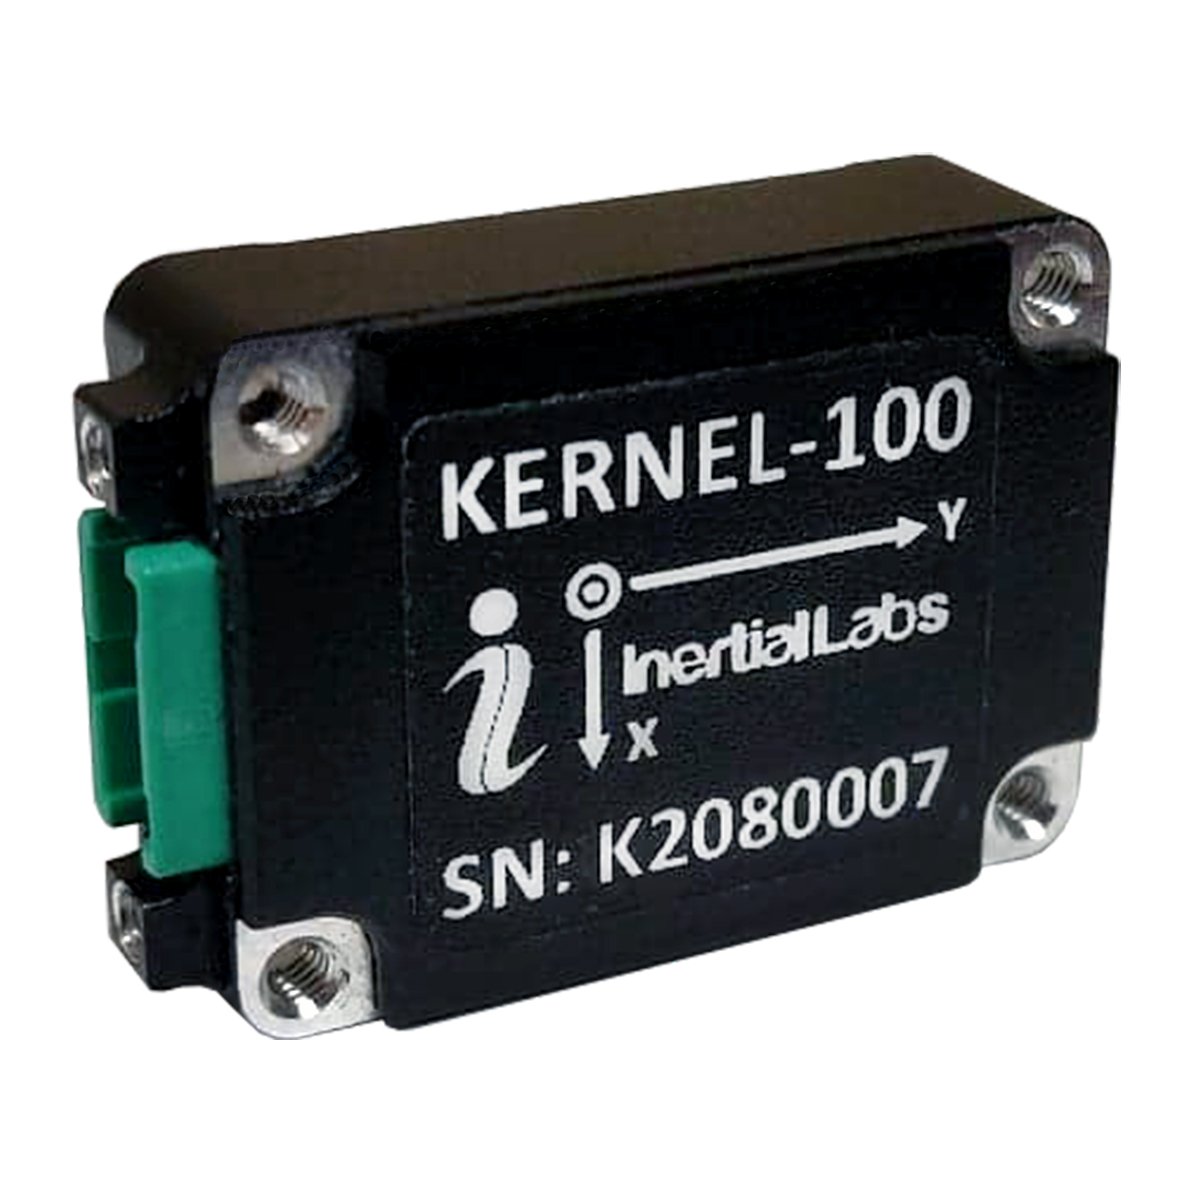 KERNEL-100 - Inertial Measurement Unit and Digital Tilt Sensor